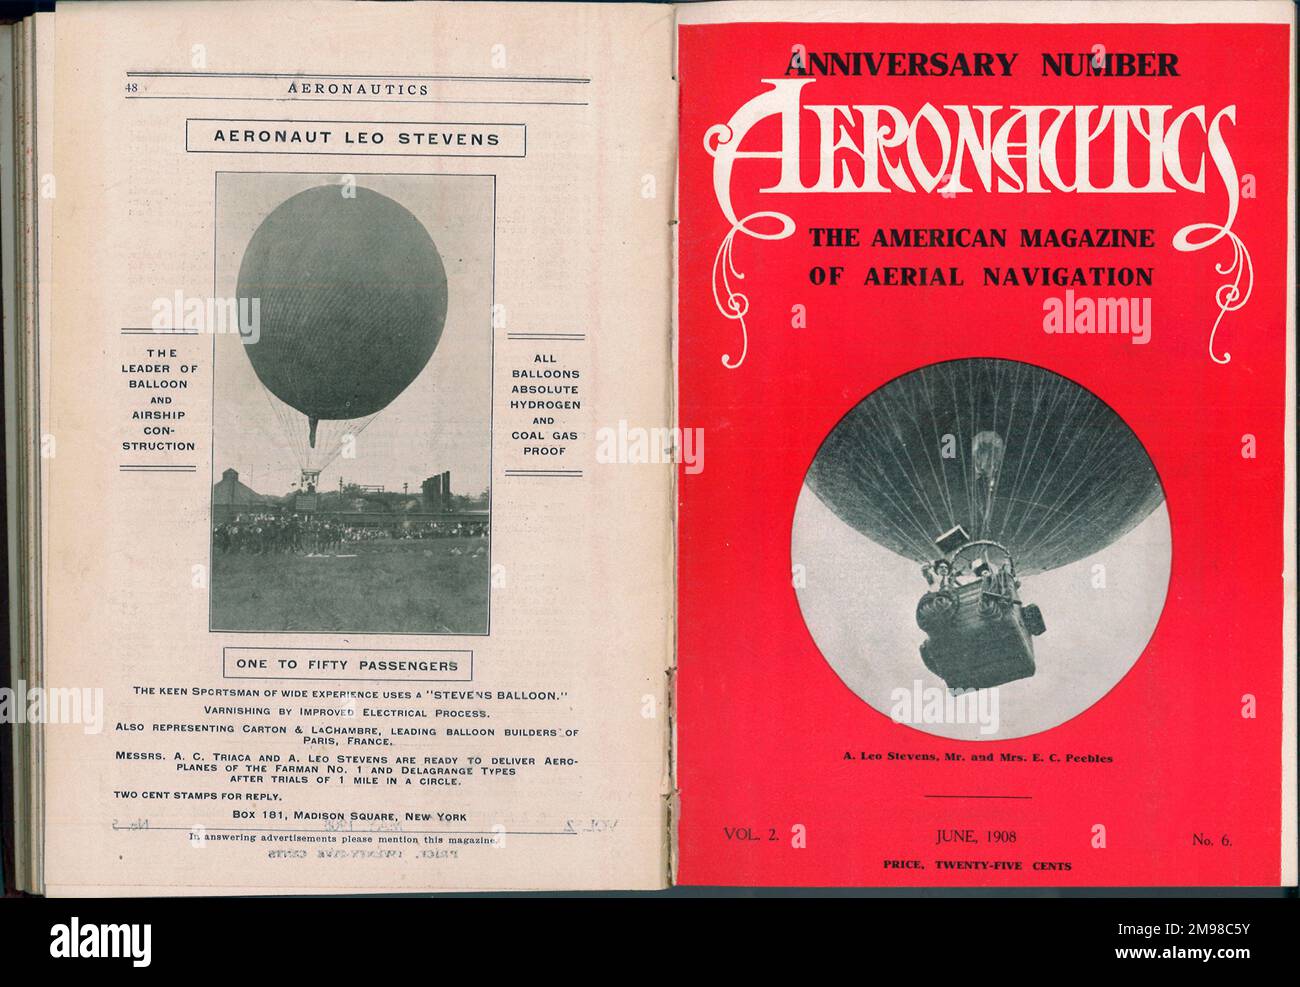 Aeronautics: the American Magazine of Aerial Navigation - magazine cover - June 1908 issue. Stock Photo